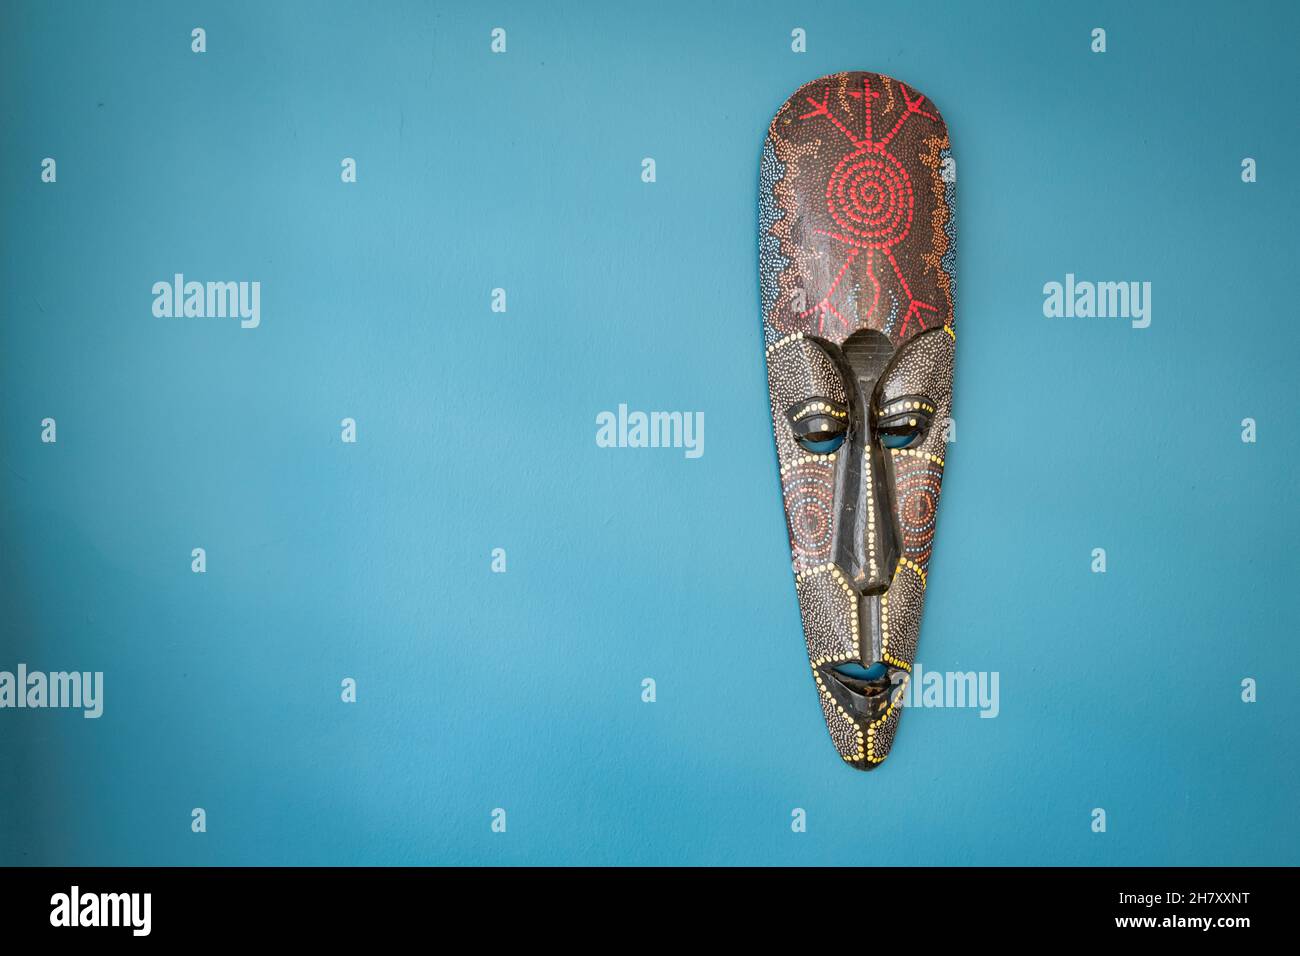 Maschera tribù sul muro. Maschera tribale Africana, maschera nera in legno delle popolazioni indigene Foto Stock